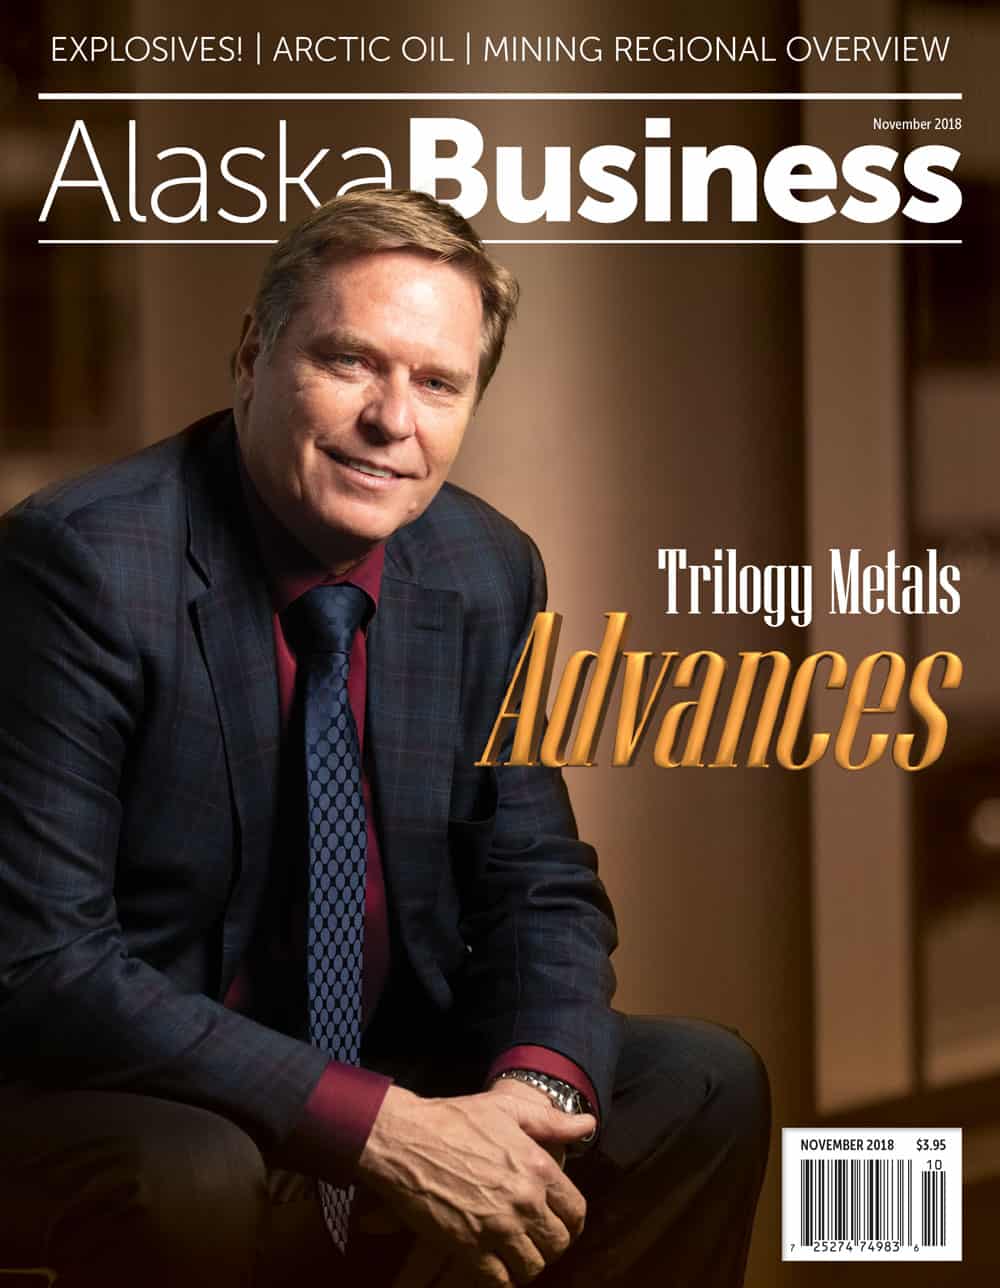 Alaska Business Magazine November 2018 cover